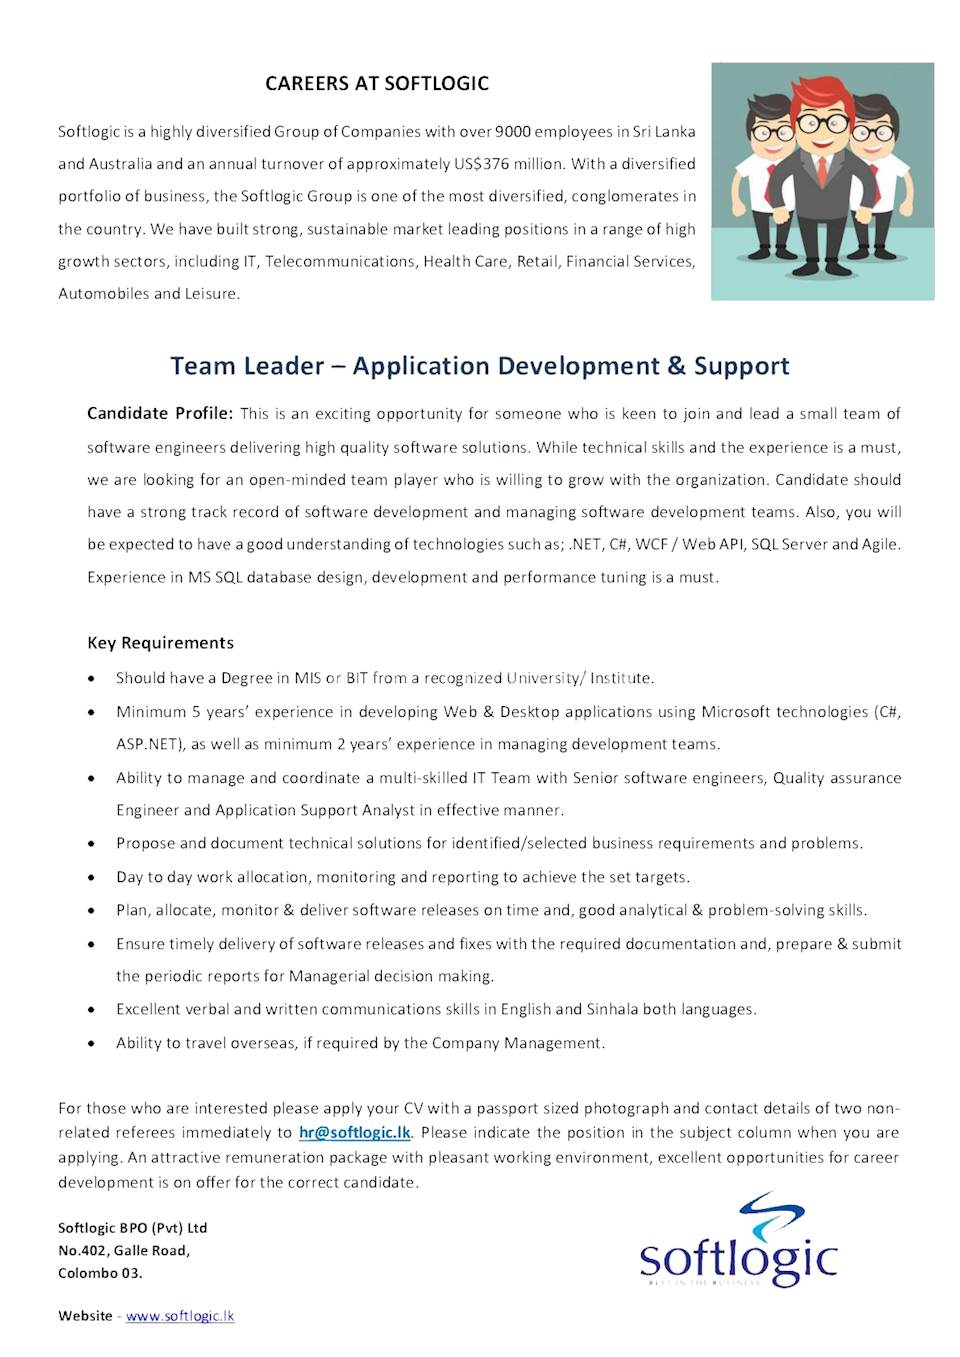 Team Leader - Application Development & Support